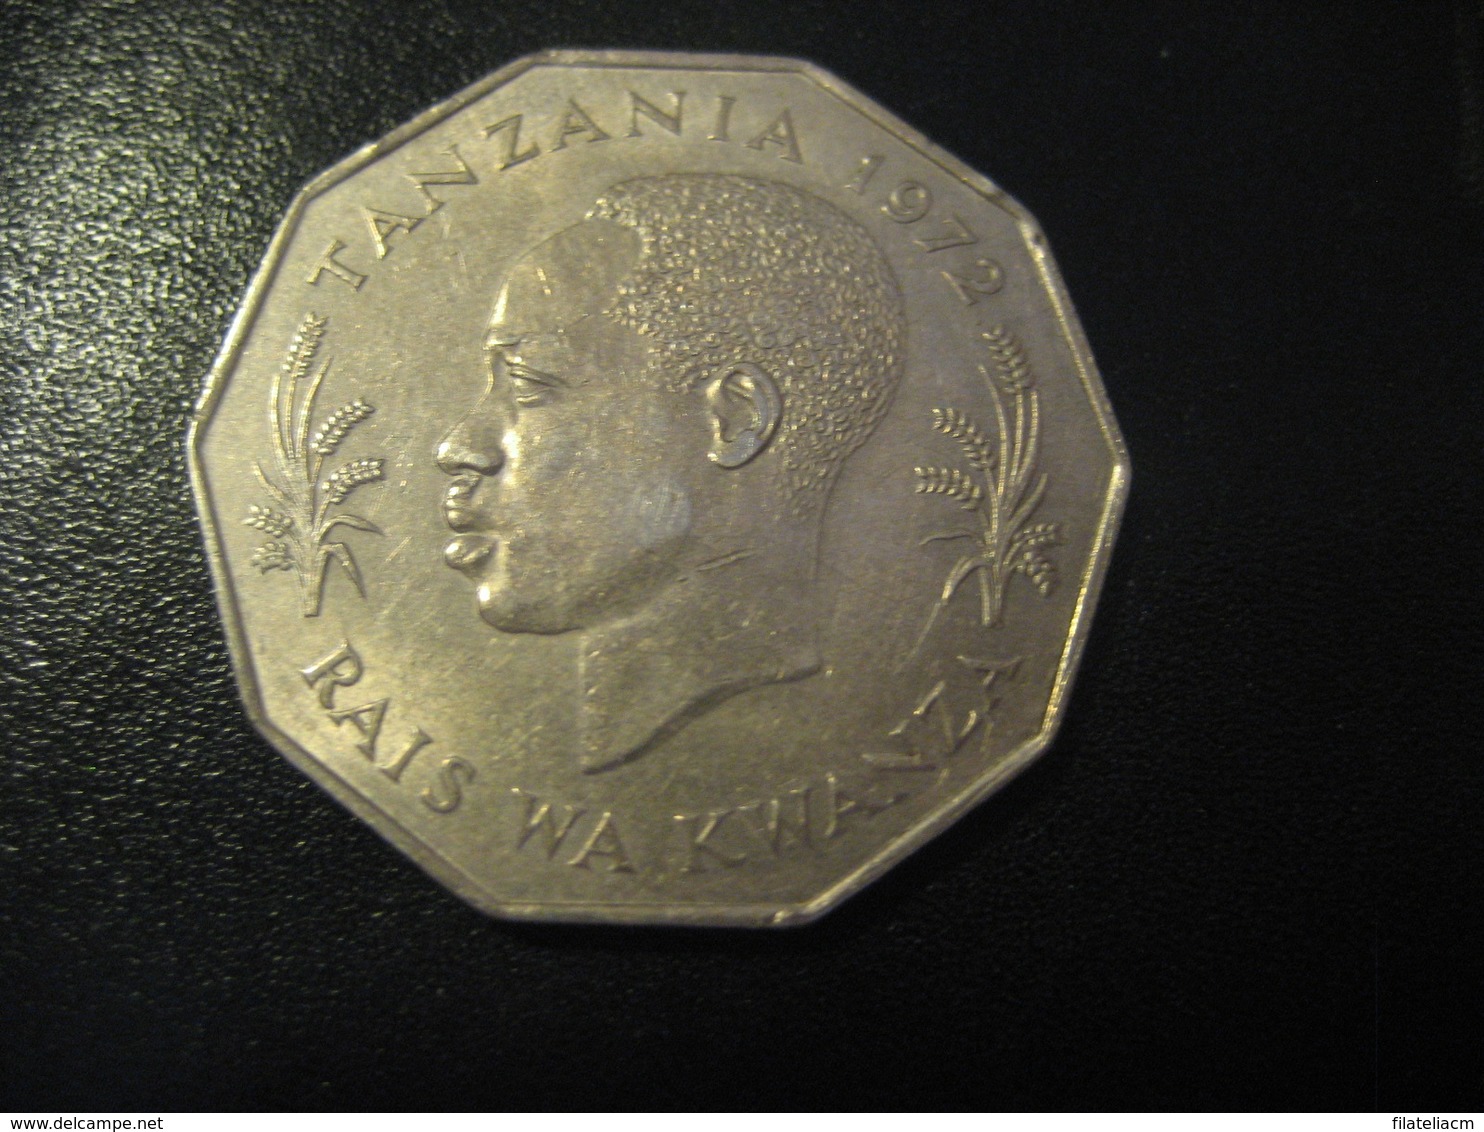 5 Five Shilingi Tano TANZANIA 1972 Coin - Tanzania